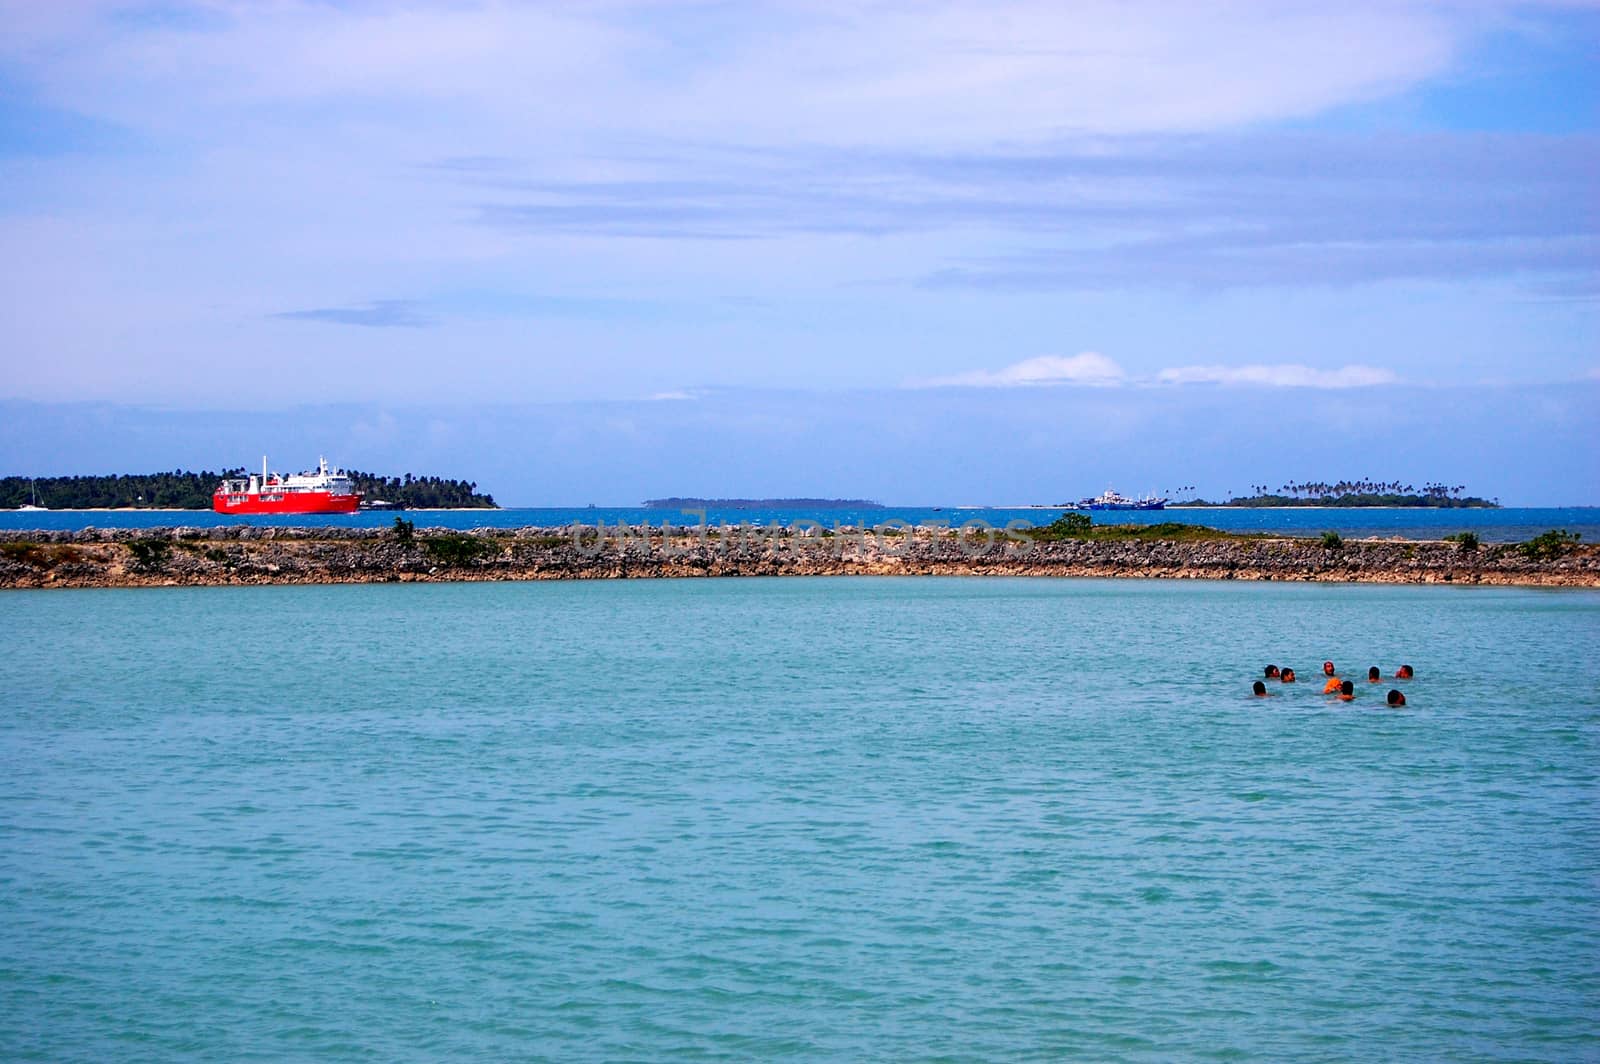 People swimming near port, Tonga by danemo